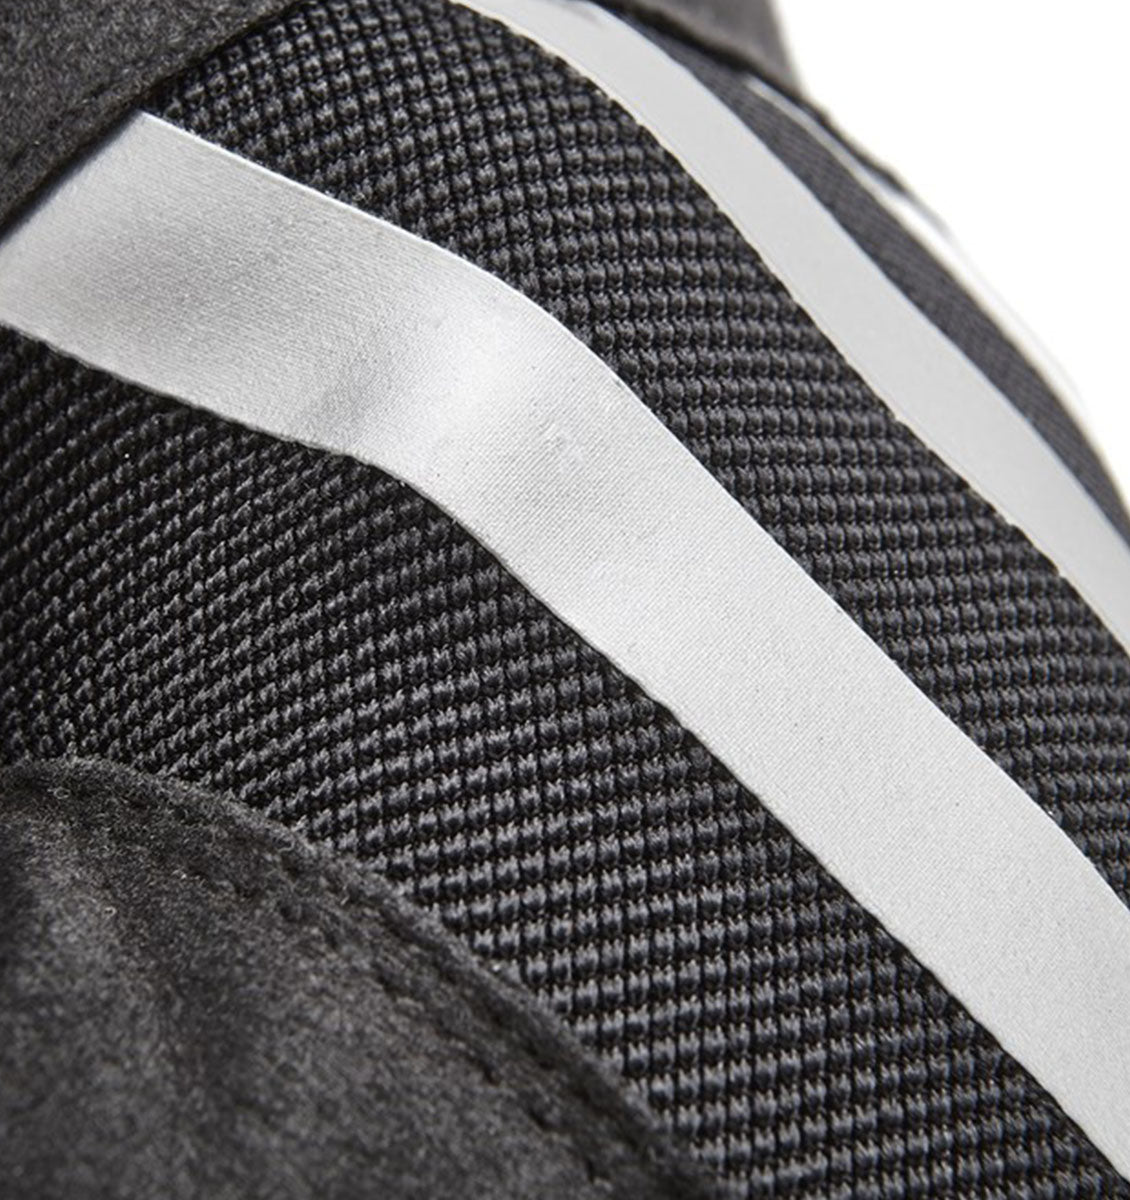 adidas Elite Training Gloves - Black/Silver - 9